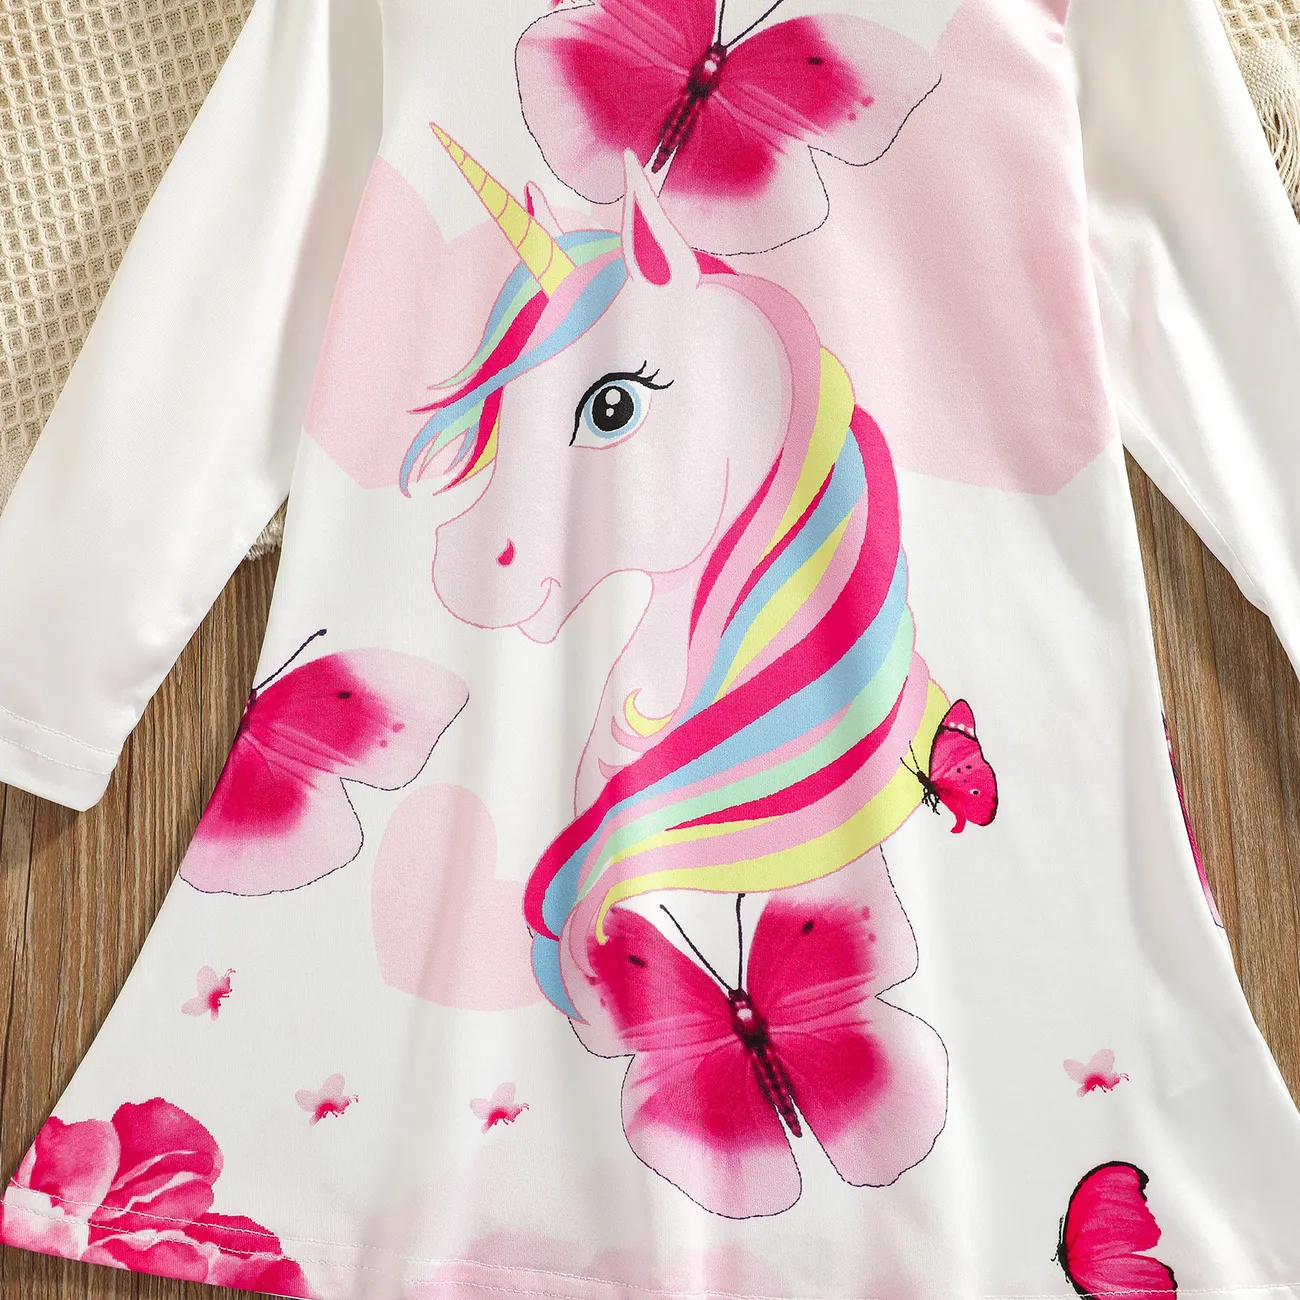 Toddler Girl Animal Unicorn Butterfly Print Long-sleeve Dress White big image 1